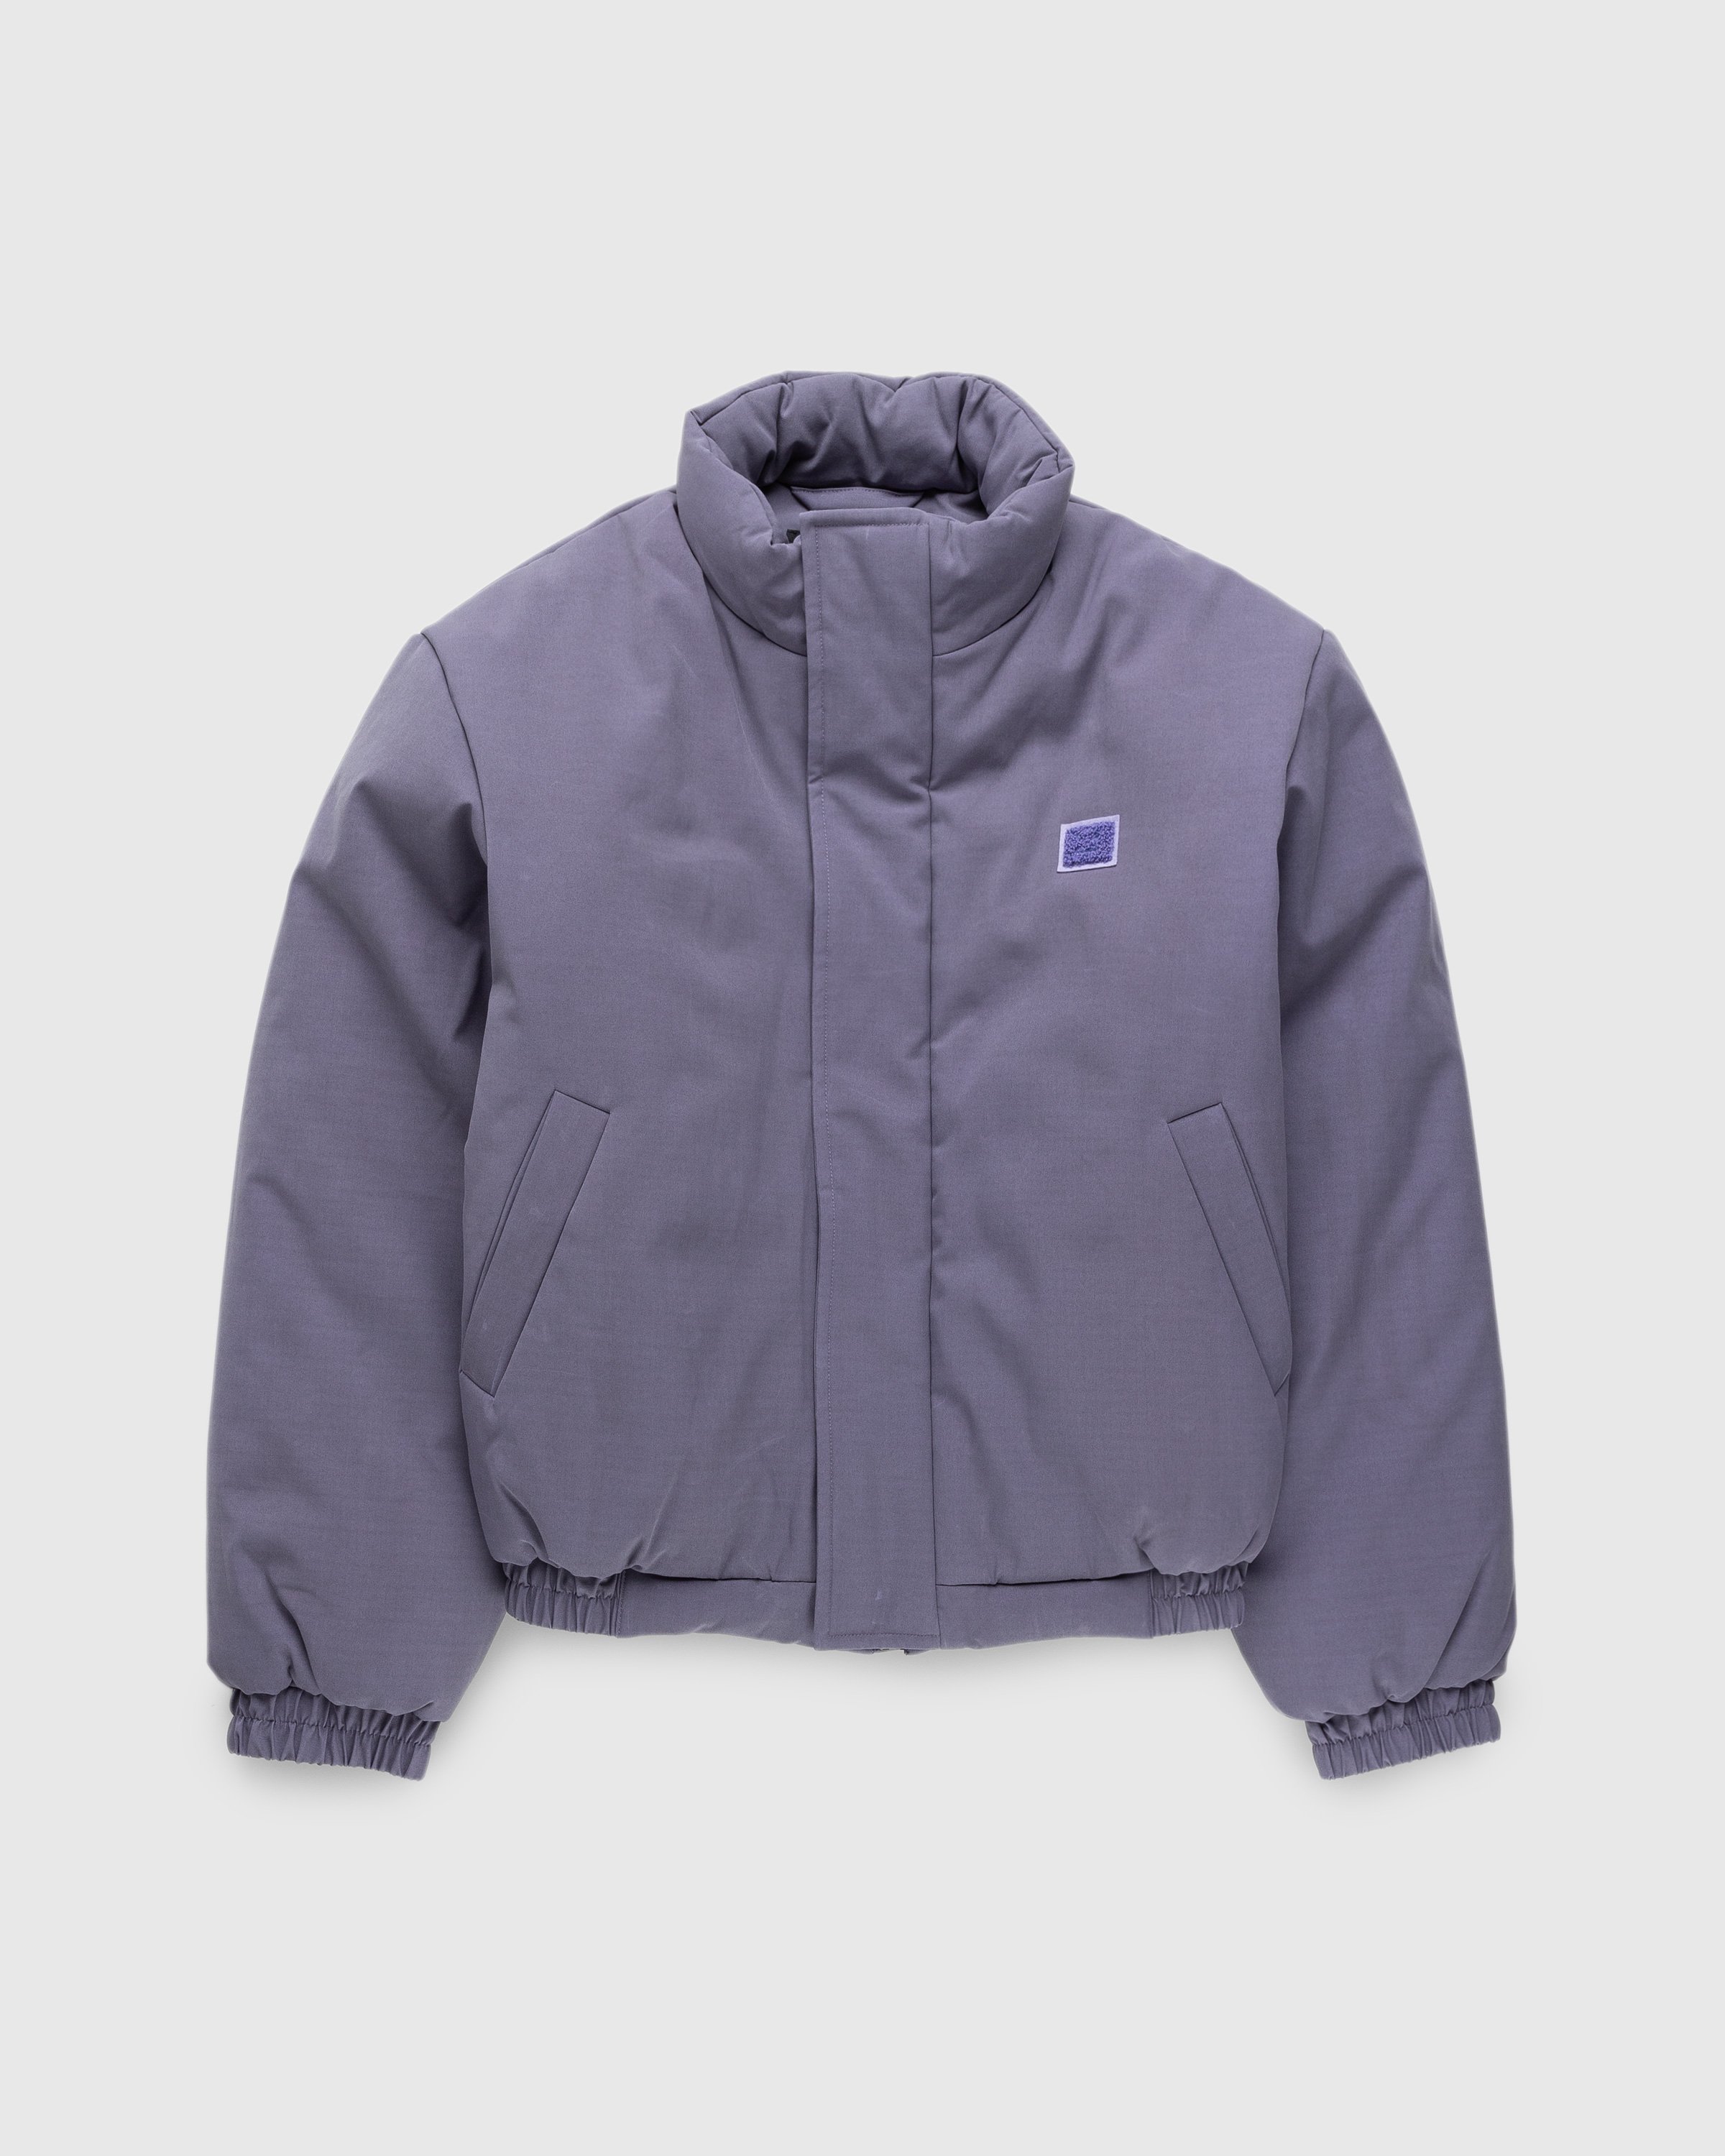 Acne Studios - Heat Reactive Jacket - Clothing - Purple - Image 1